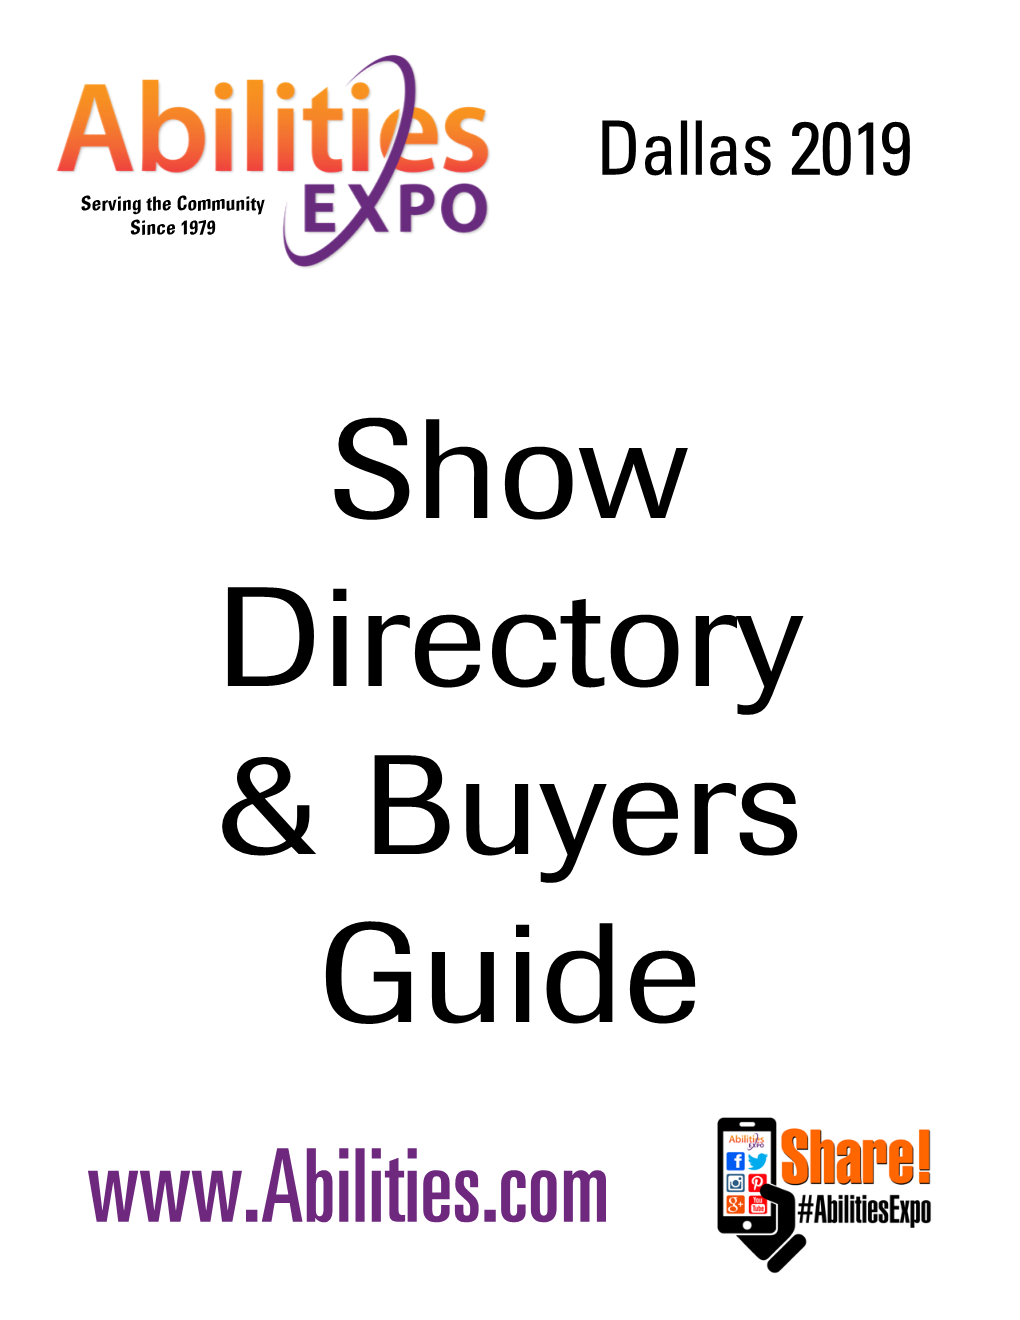 View the 2019 Dallas Show Directory